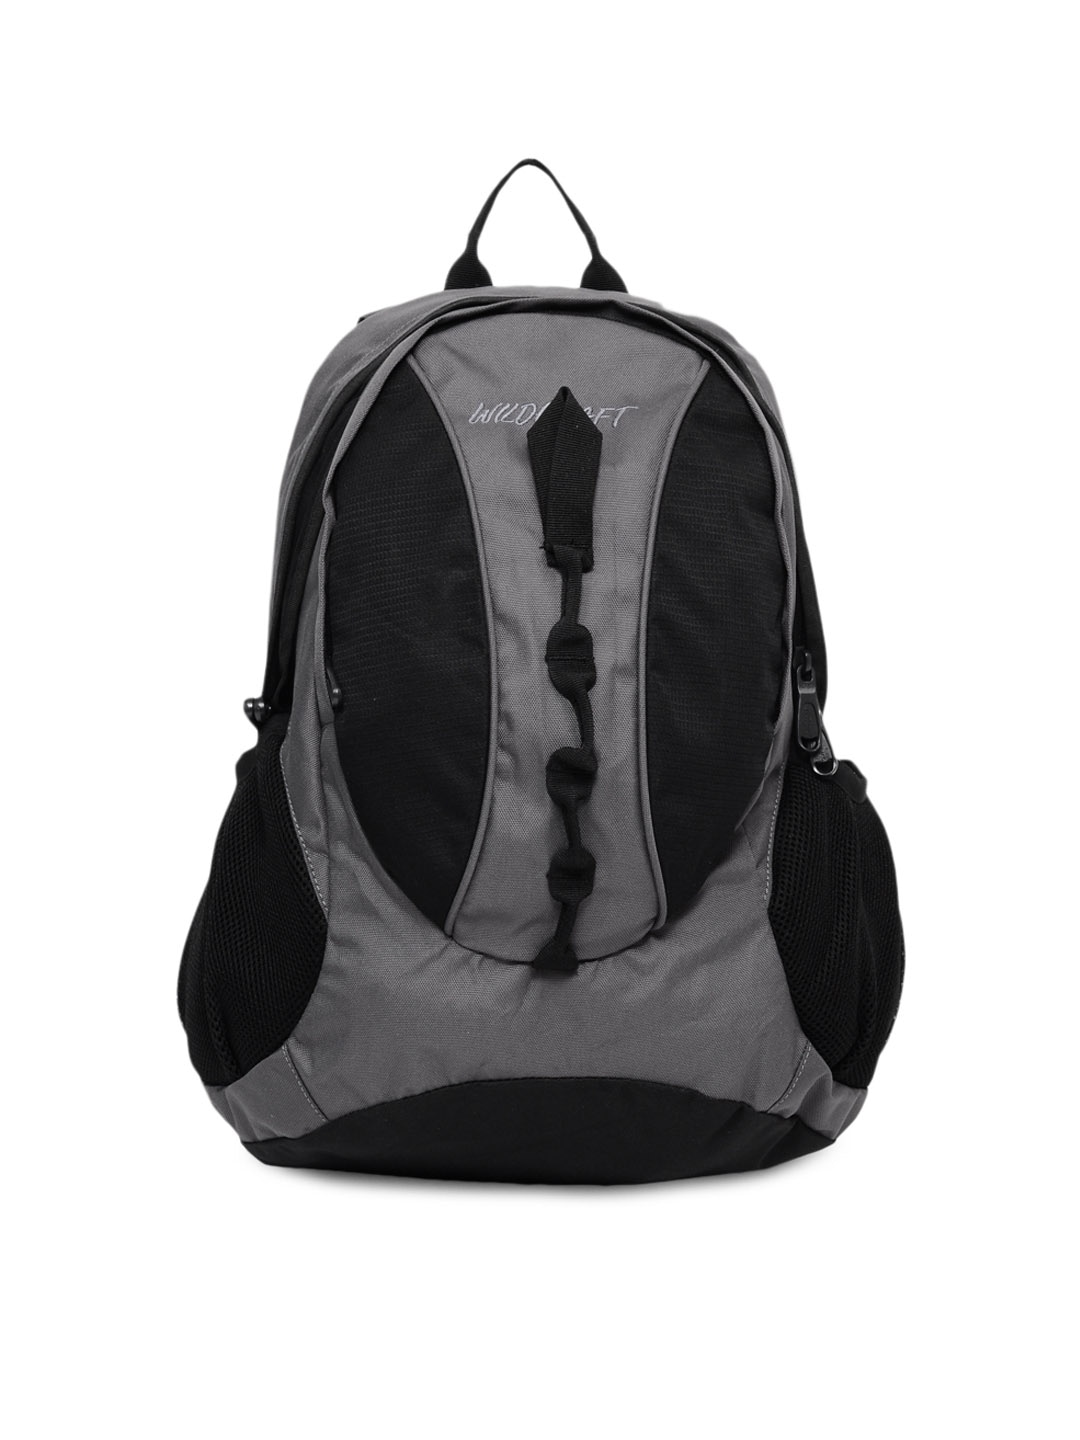 Wildcraft Unisex Black & Grey Backpack